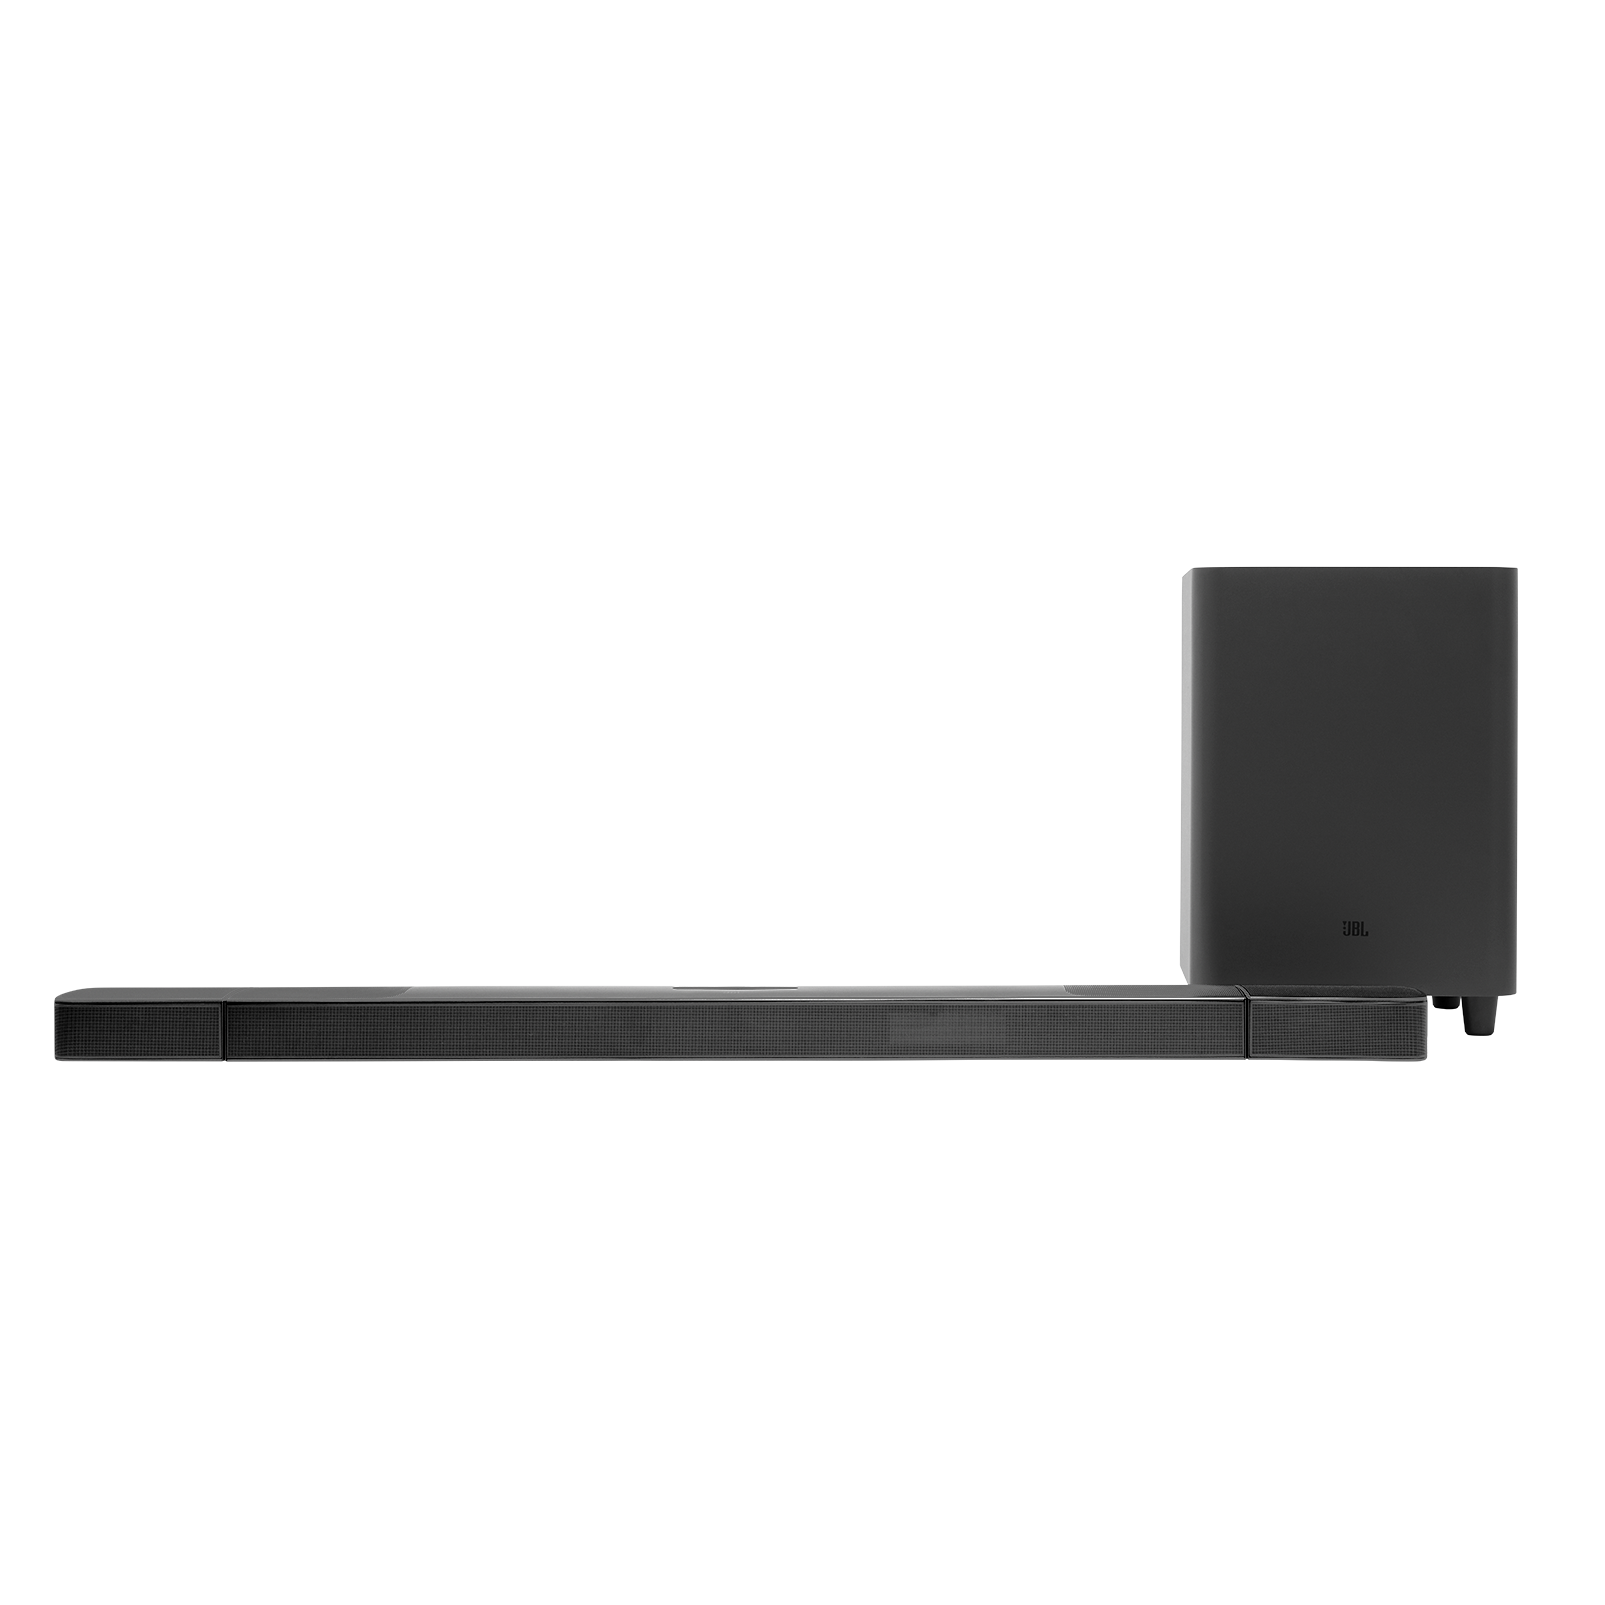 JBL BAR 9.1 True Wireless Surround with Dolby Atmos® - Black - Detailshot 5